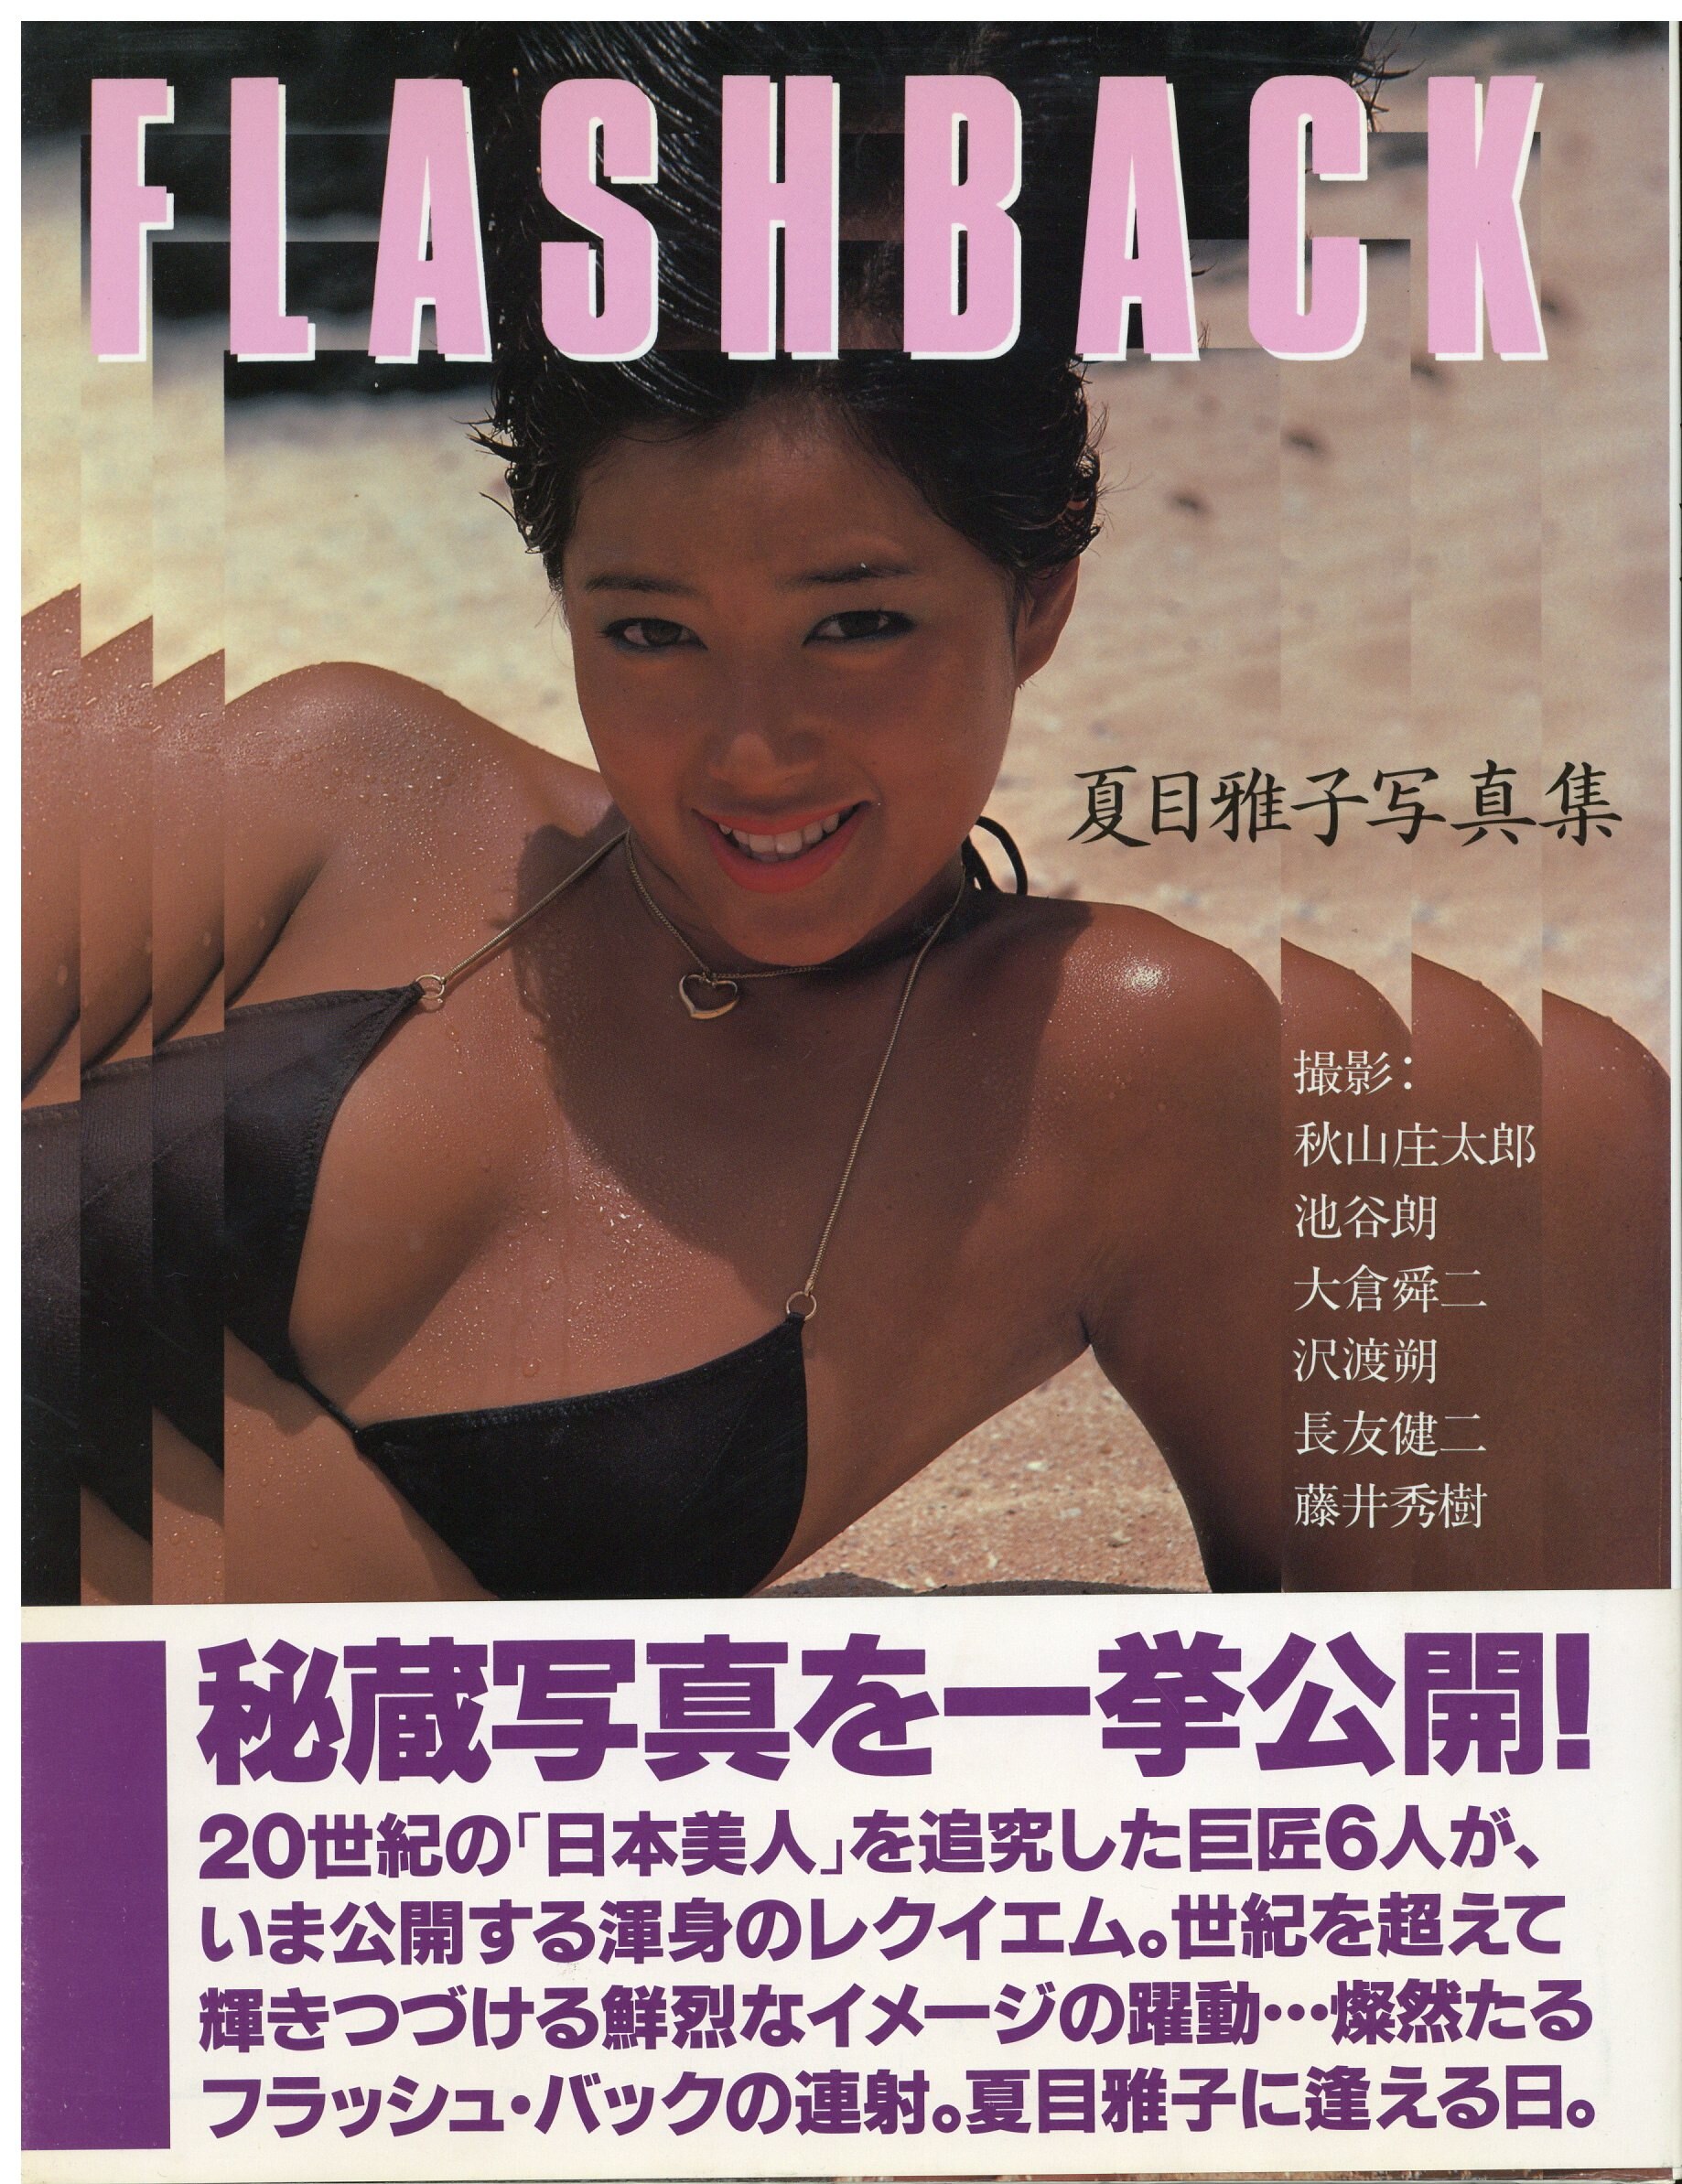 Natsume Masako Photo Album Natsume Masako Flashback | Mandarake Online Shop